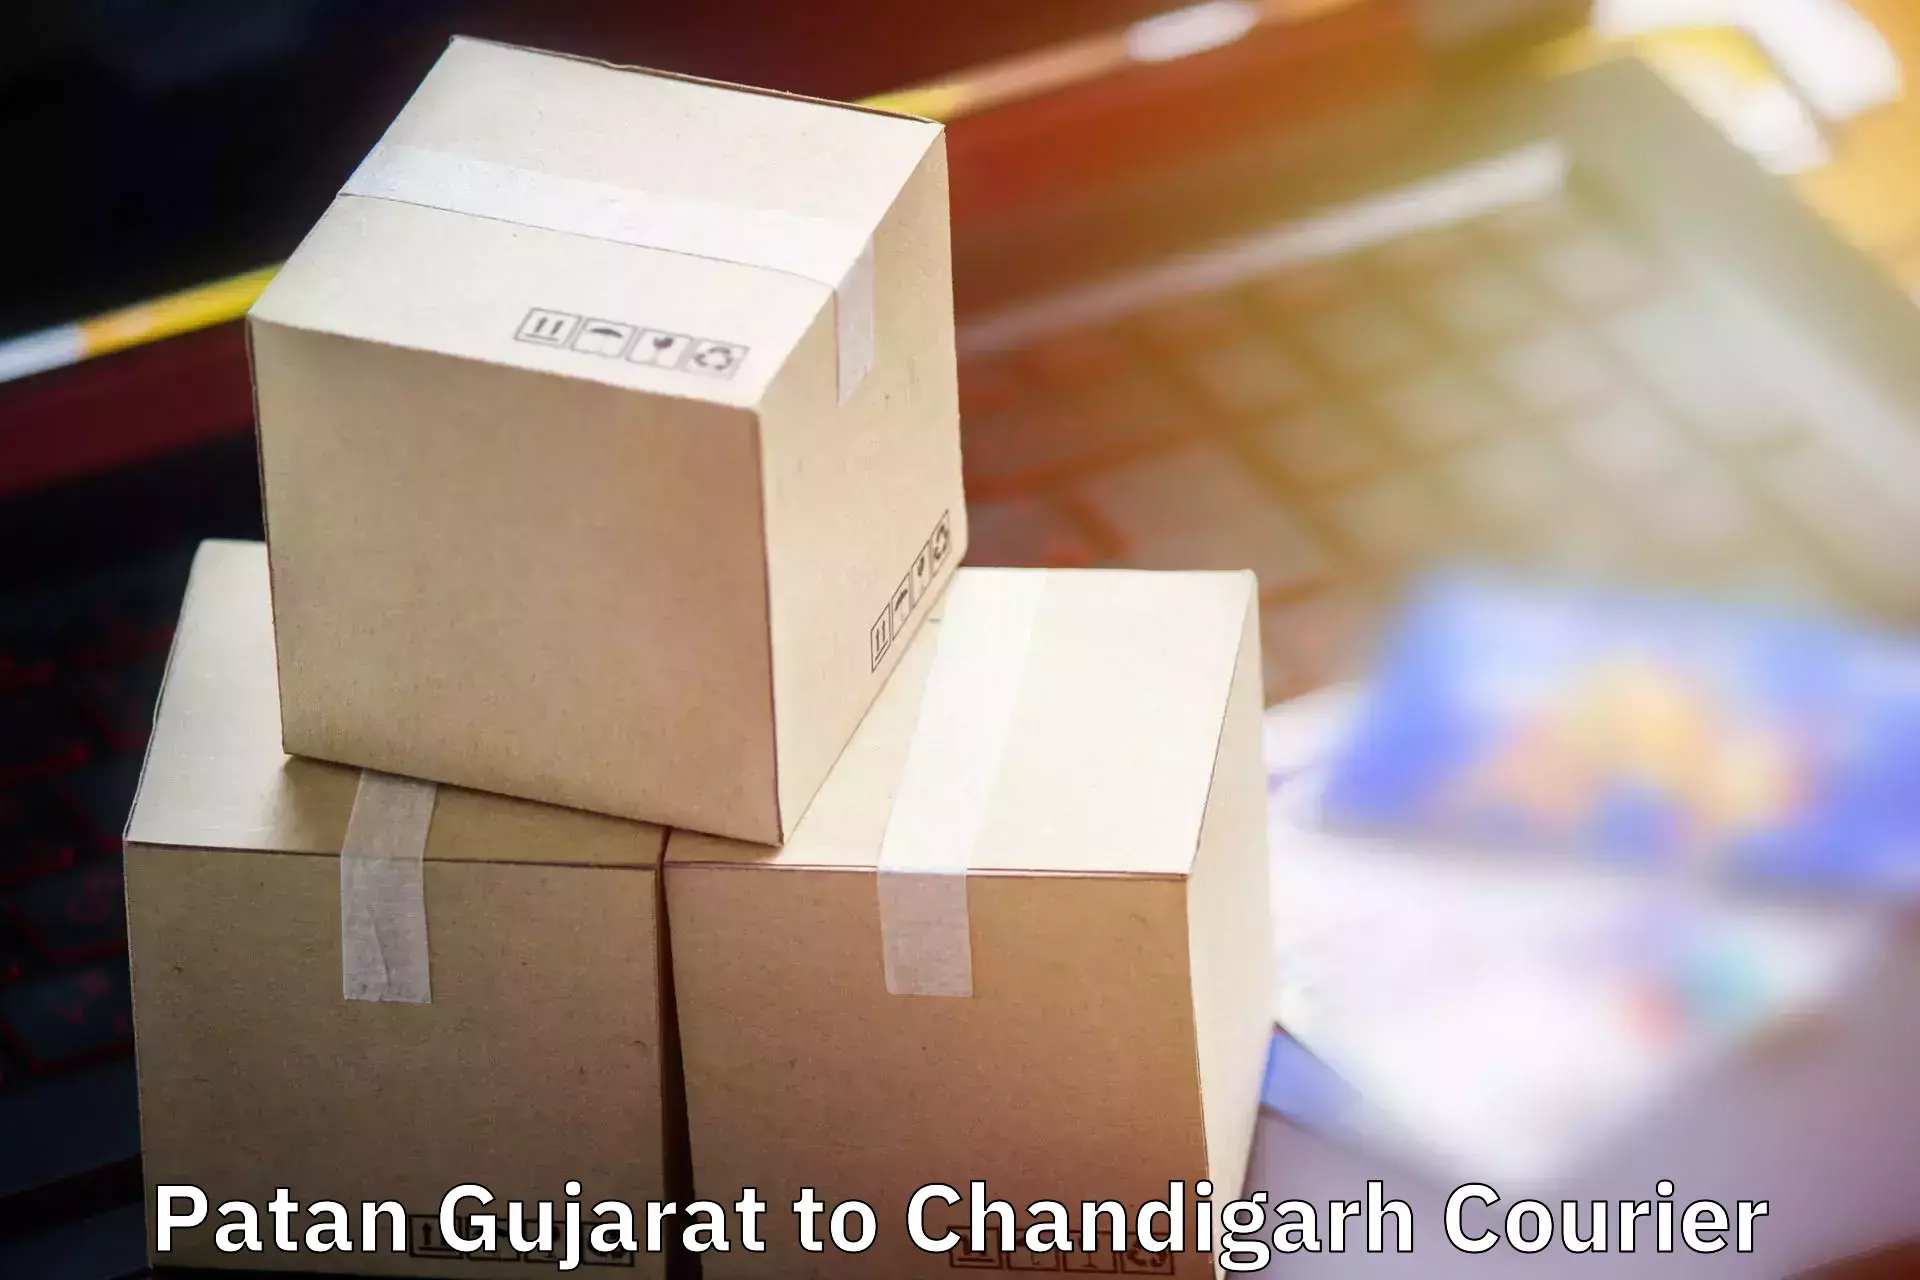 Baggage relocation service Patan Gujarat to Chandigarh